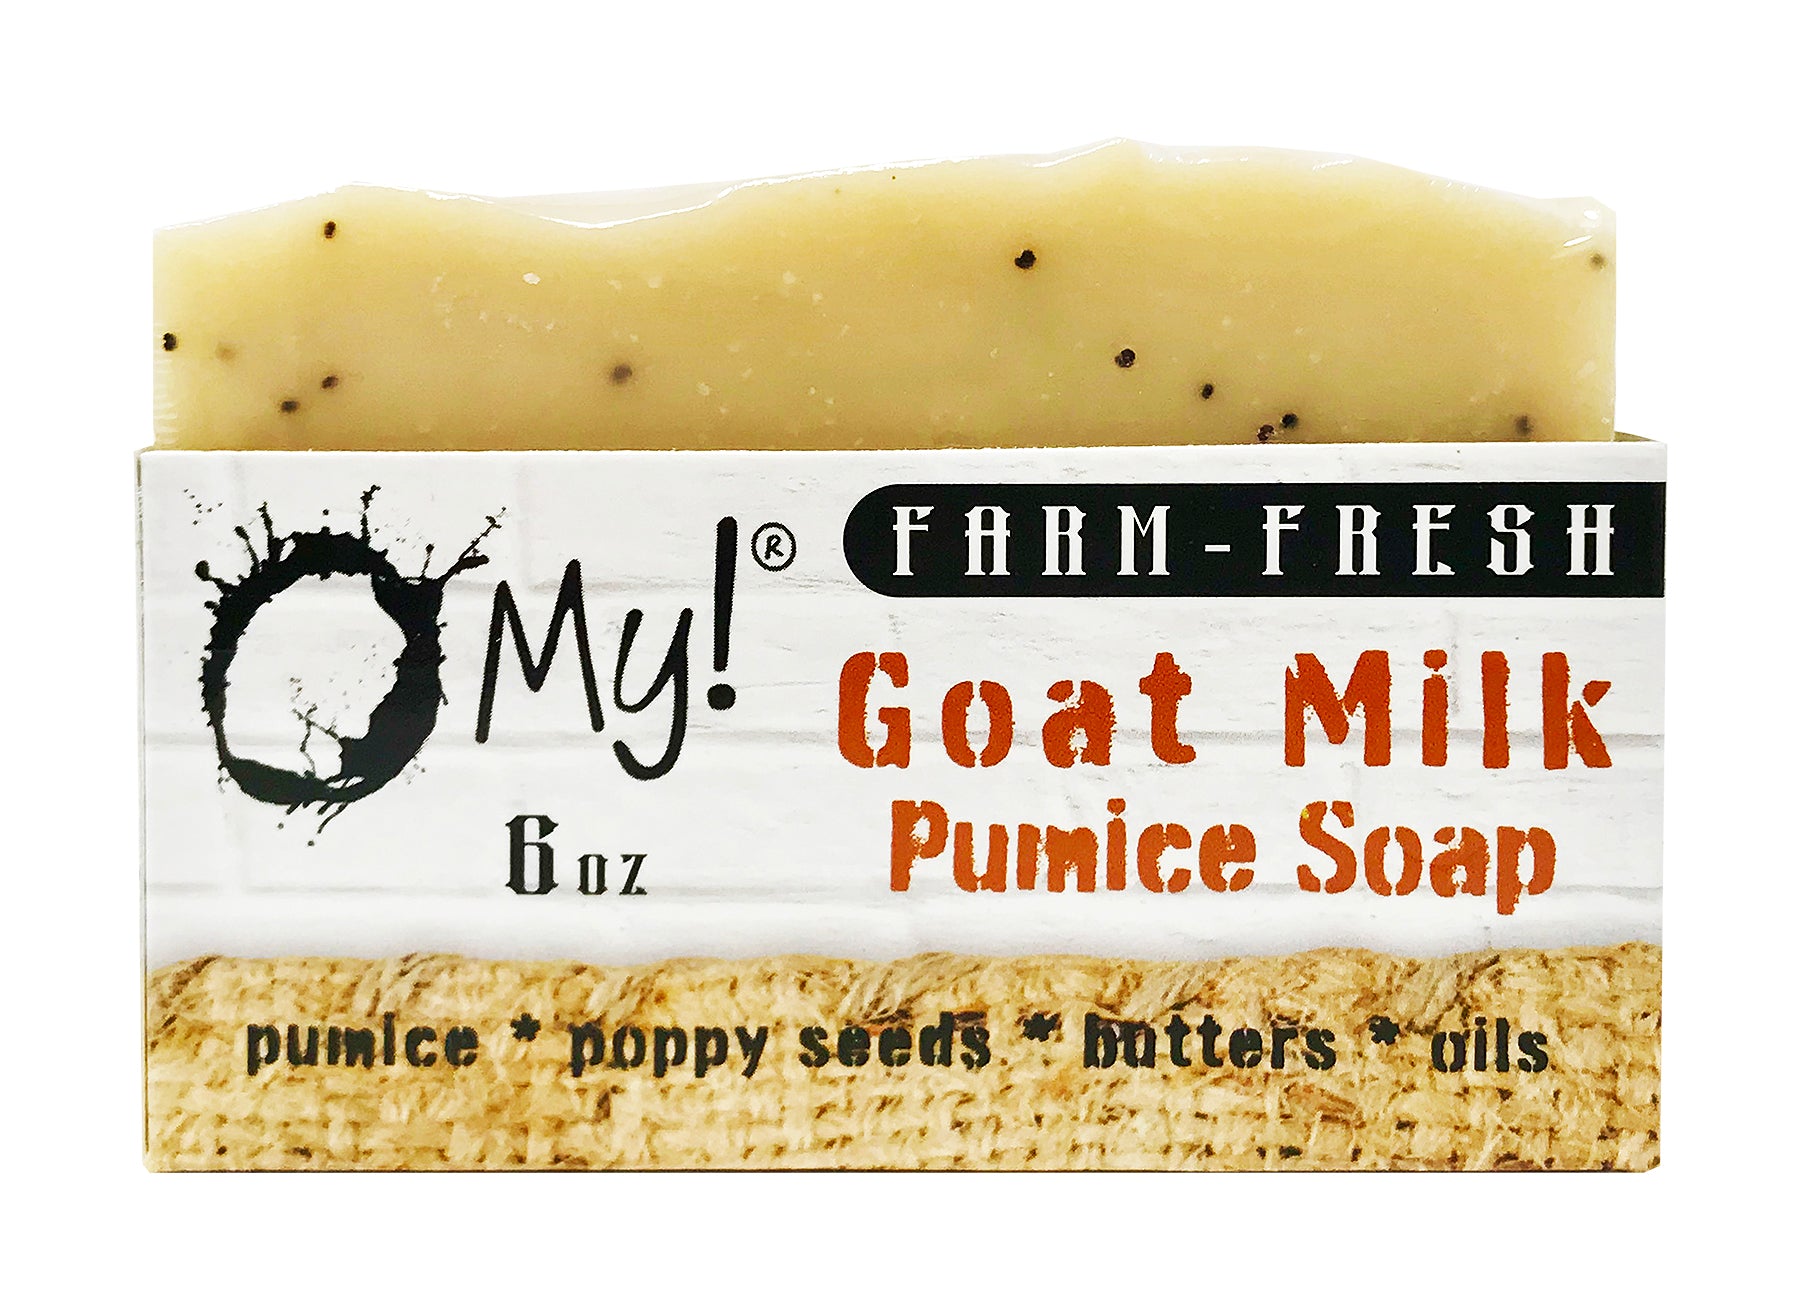 O My! Goat Milk Pumice Soap 6oz  Made with Farm-Fresh Goat Milk